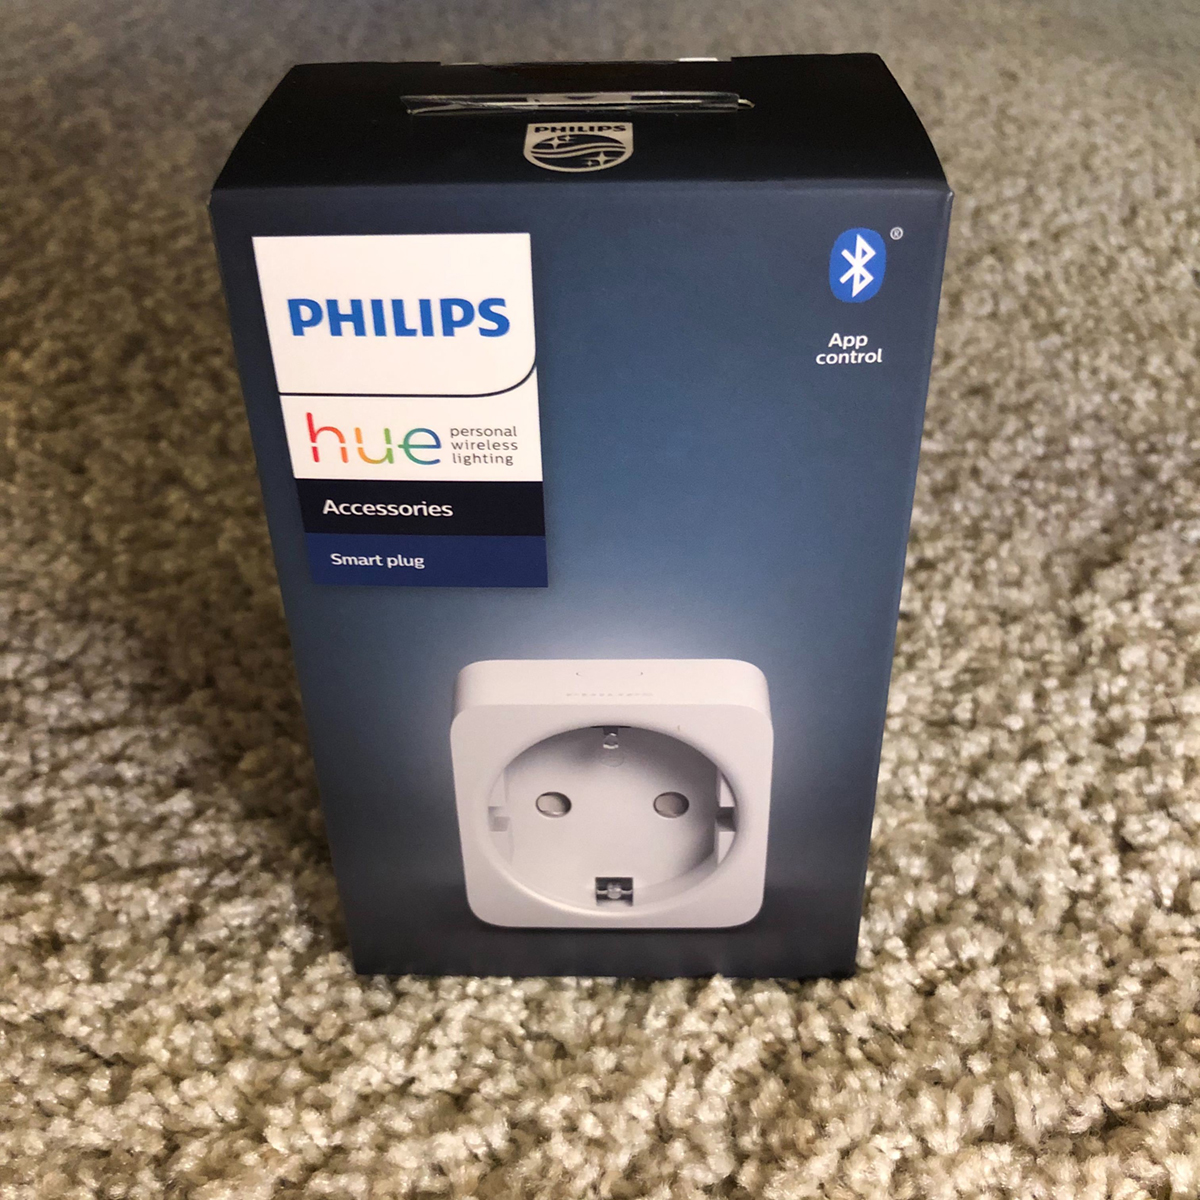 Philips Hue Smart Plug - First Look - Homekit News and Reviews